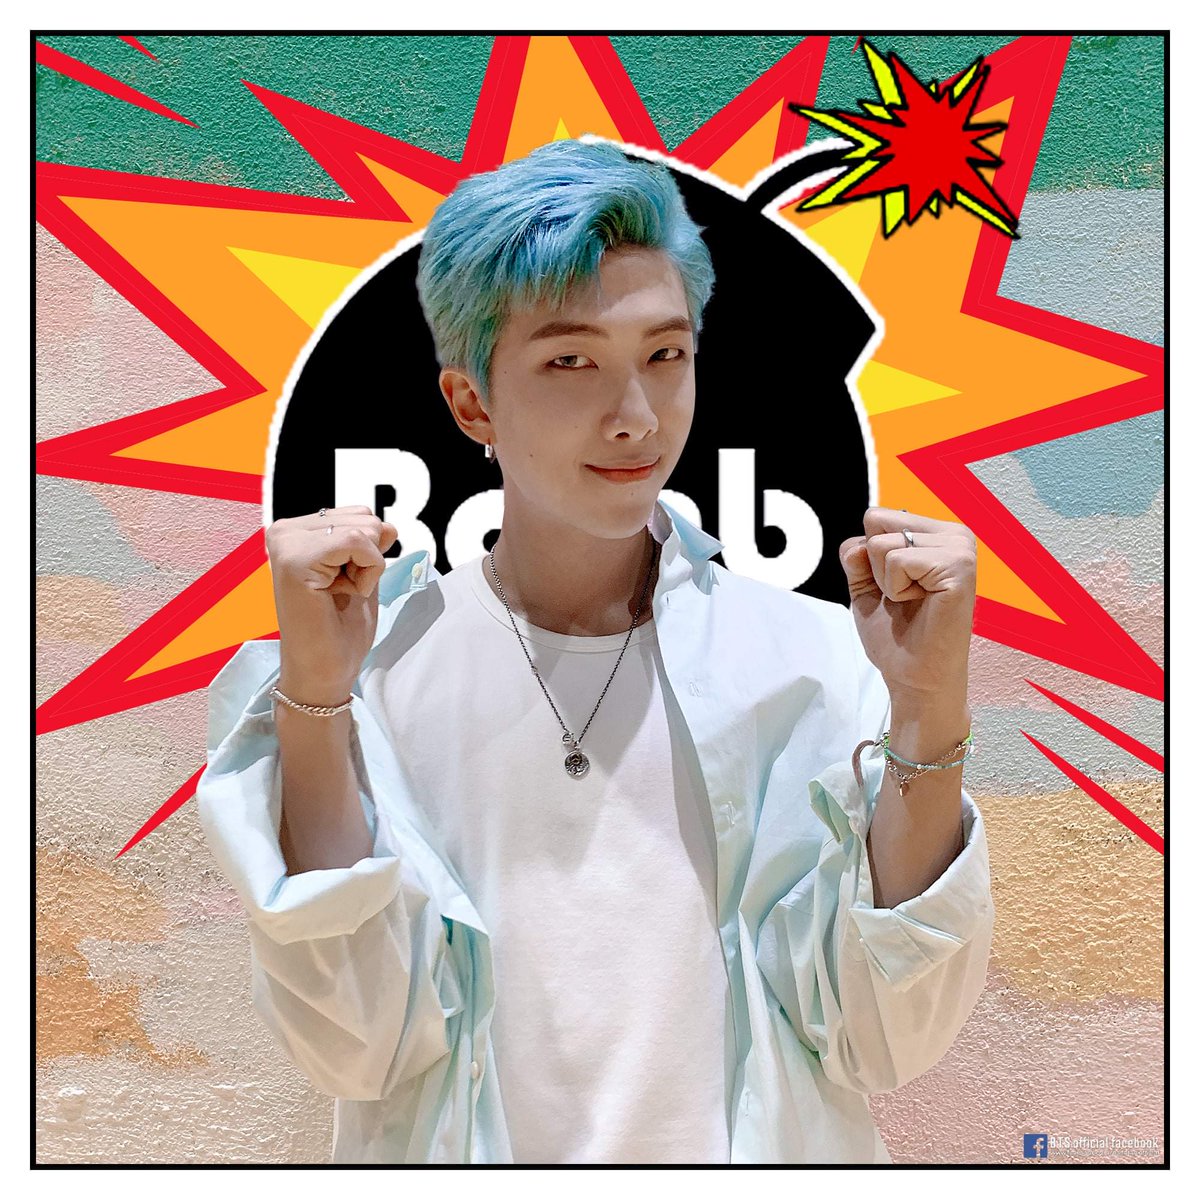 BTS emoticON 2 - RM #방탄소년단    #BTS    @BTS_twt